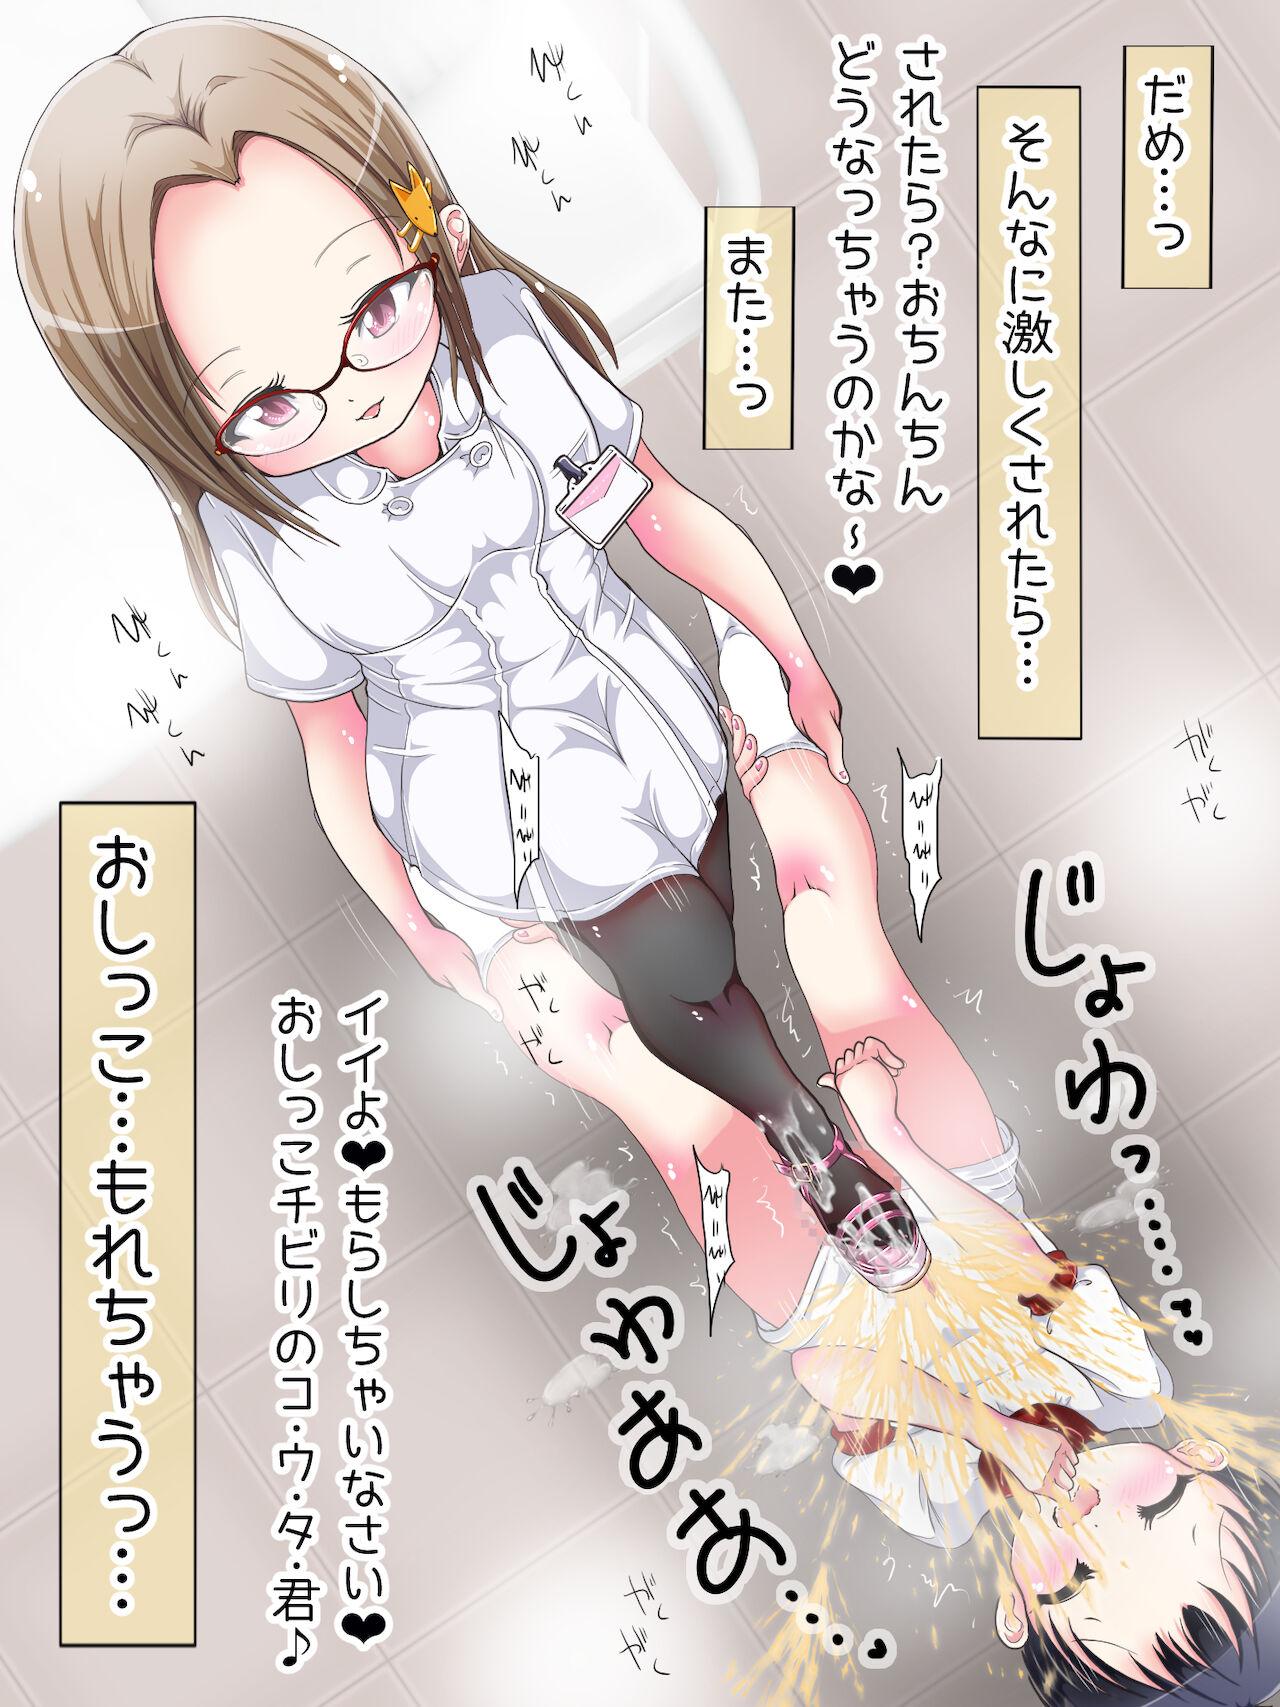 [Oneashi] One-Shota Footjob Lessons: Foot-Stroked by Nurses 242